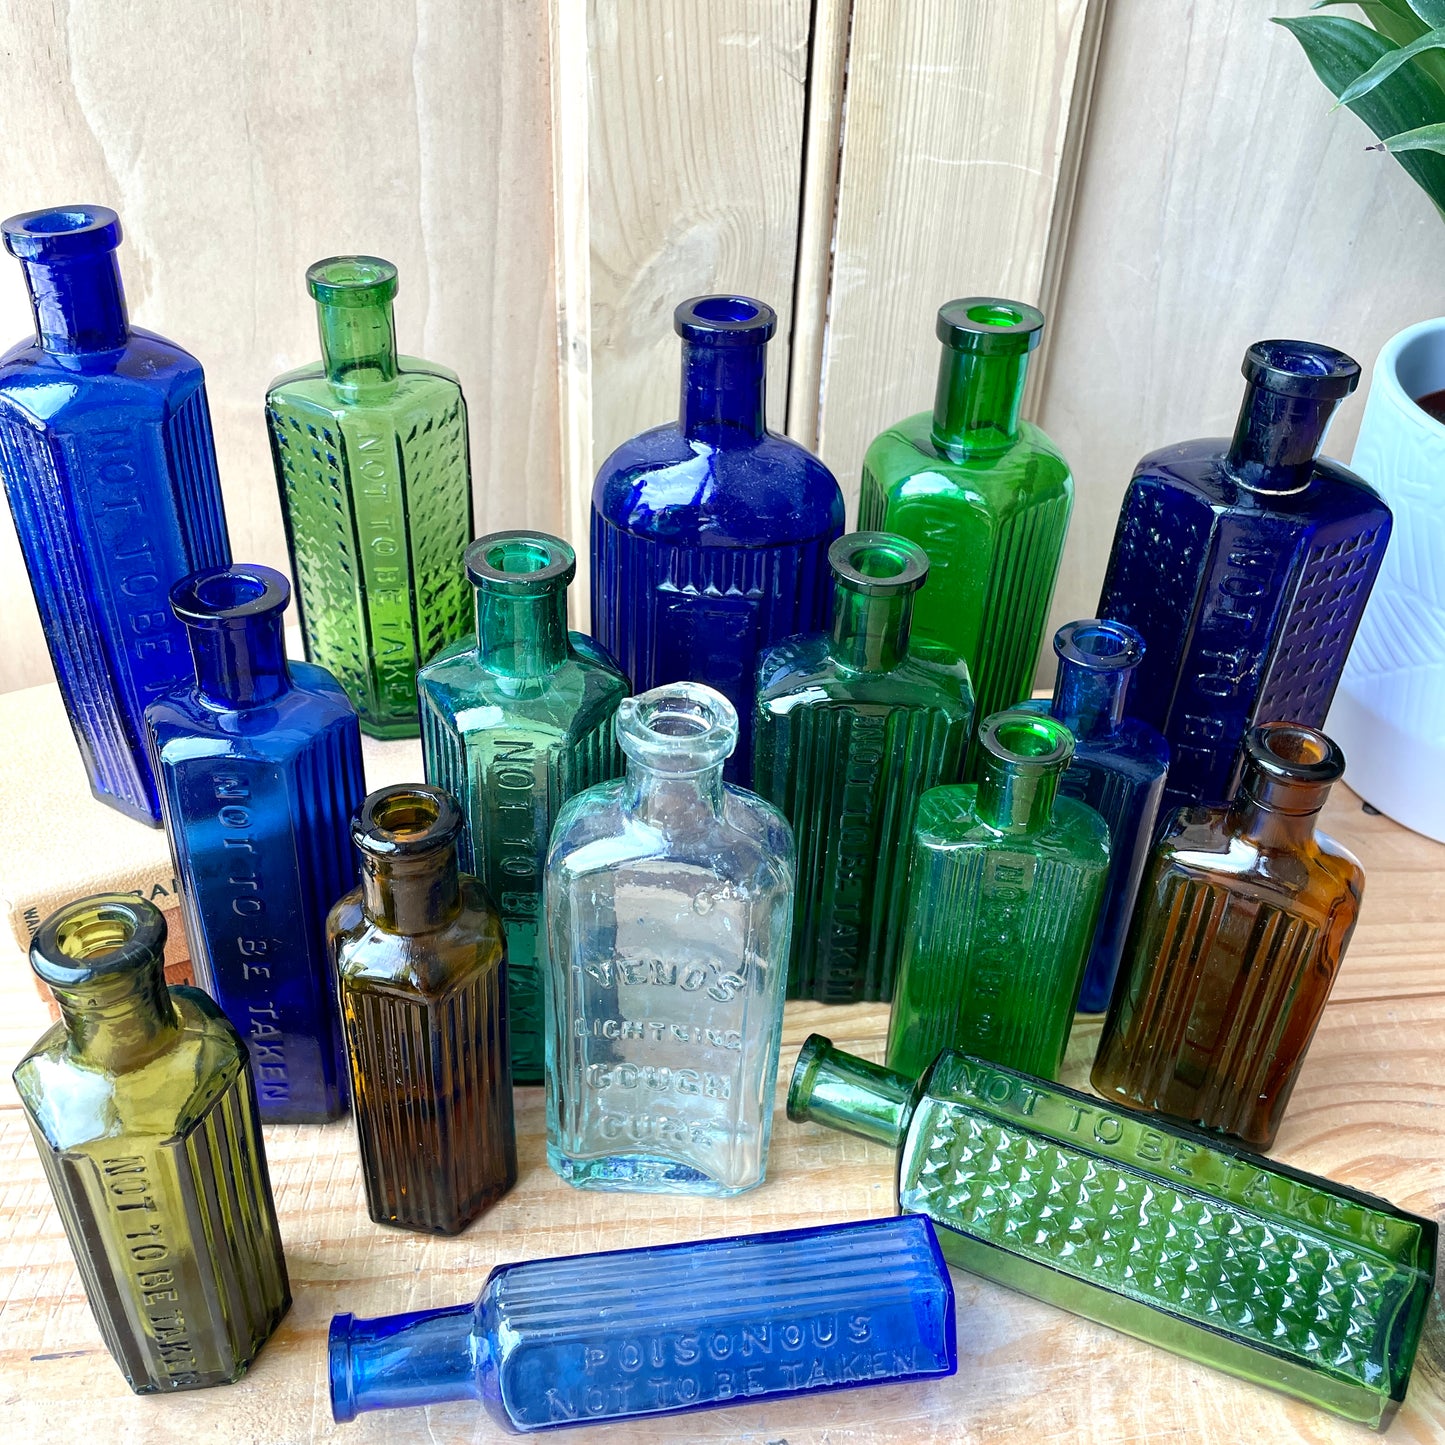 Vintage chemist and poison bottles